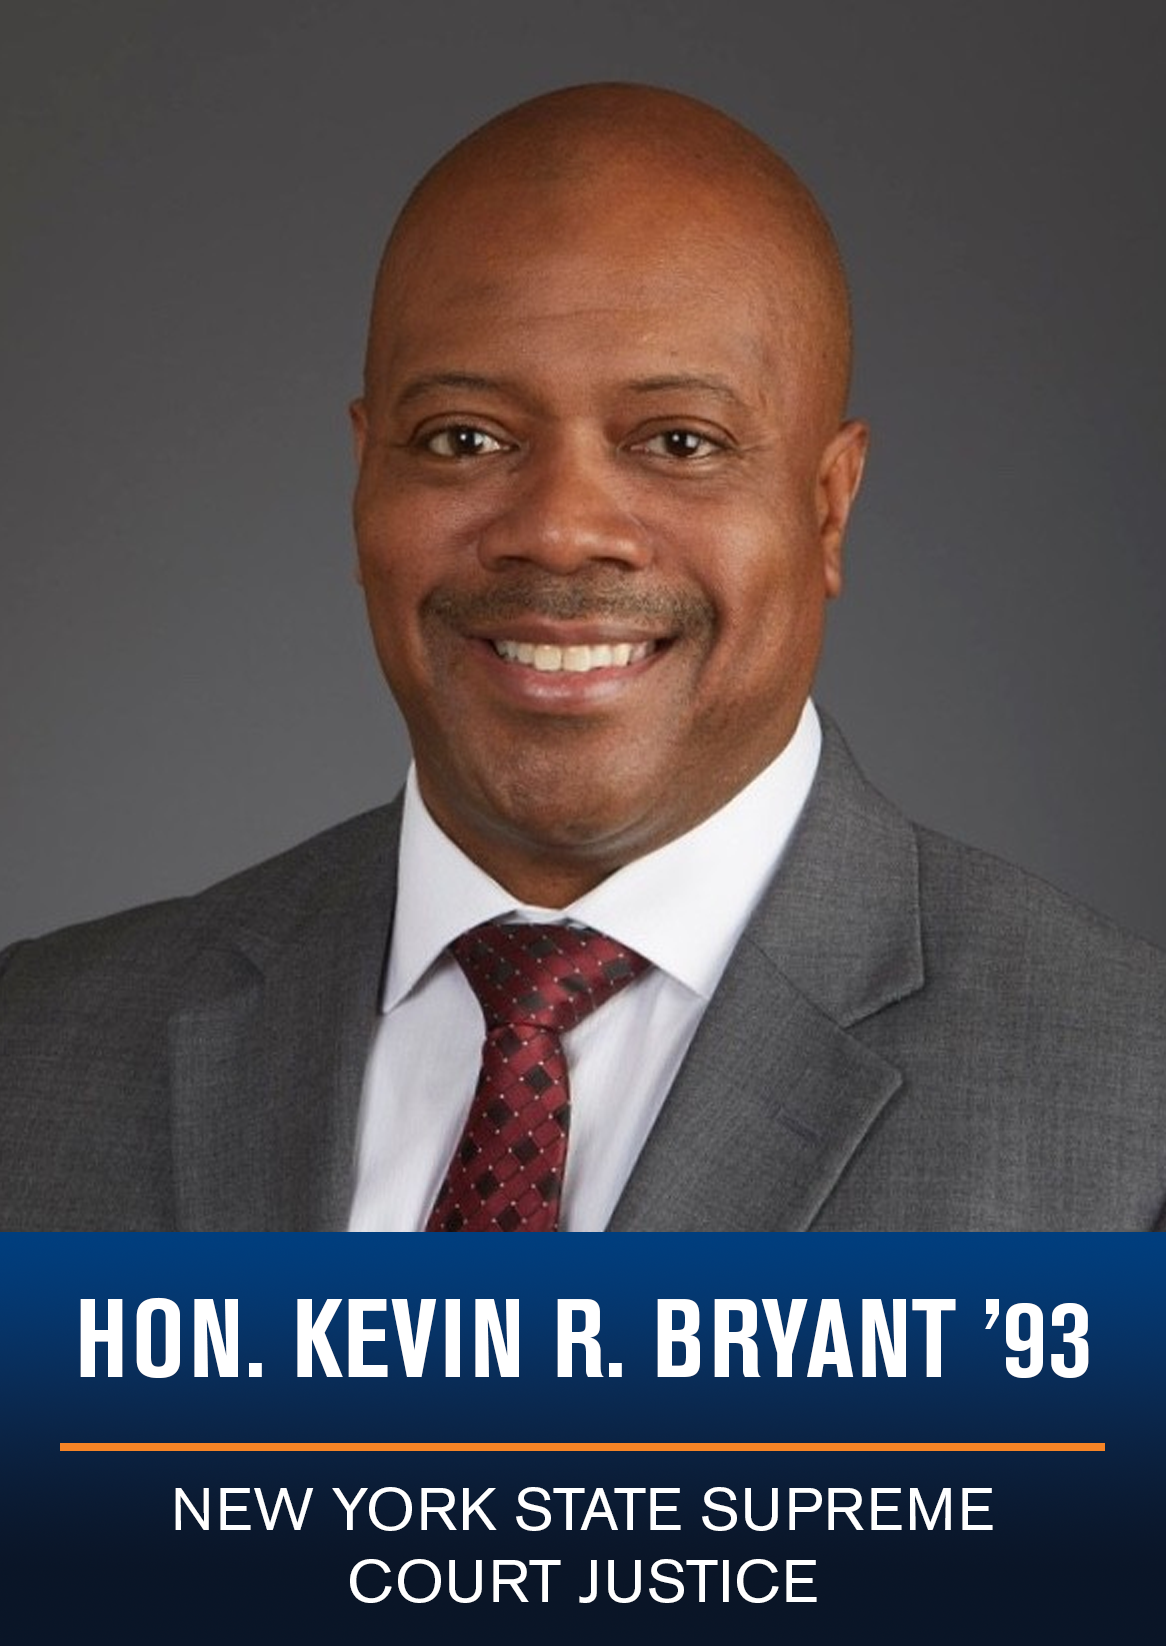 The Hon. Kevin R. Bryant ’93